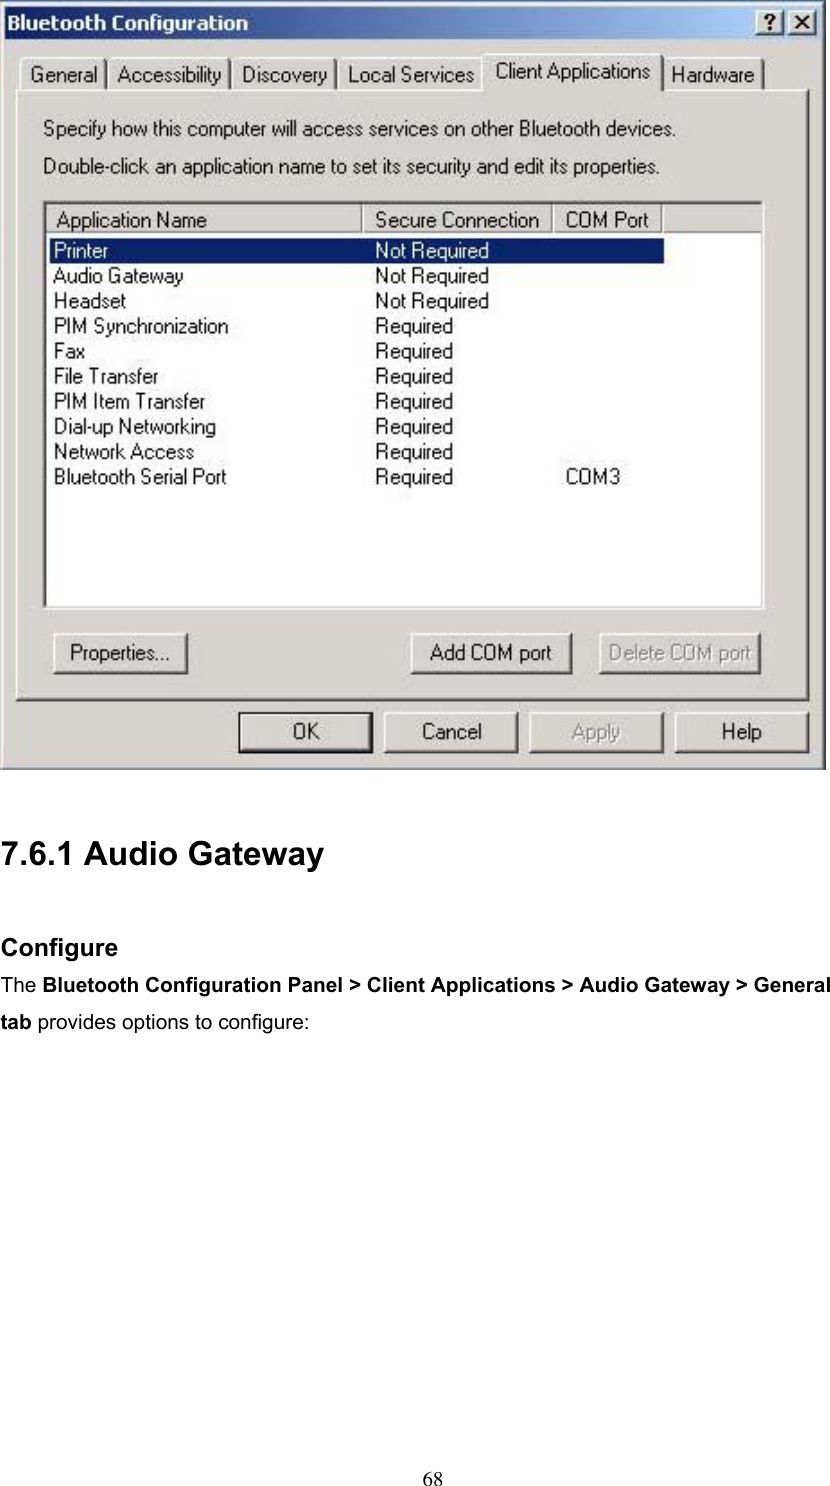   7.6.1 Audio Gateway  Configure The Bluetooth Configuration Panel &gt; Client Applications &gt; Audio Gateway &gt; General tab provides options to configure:  68 